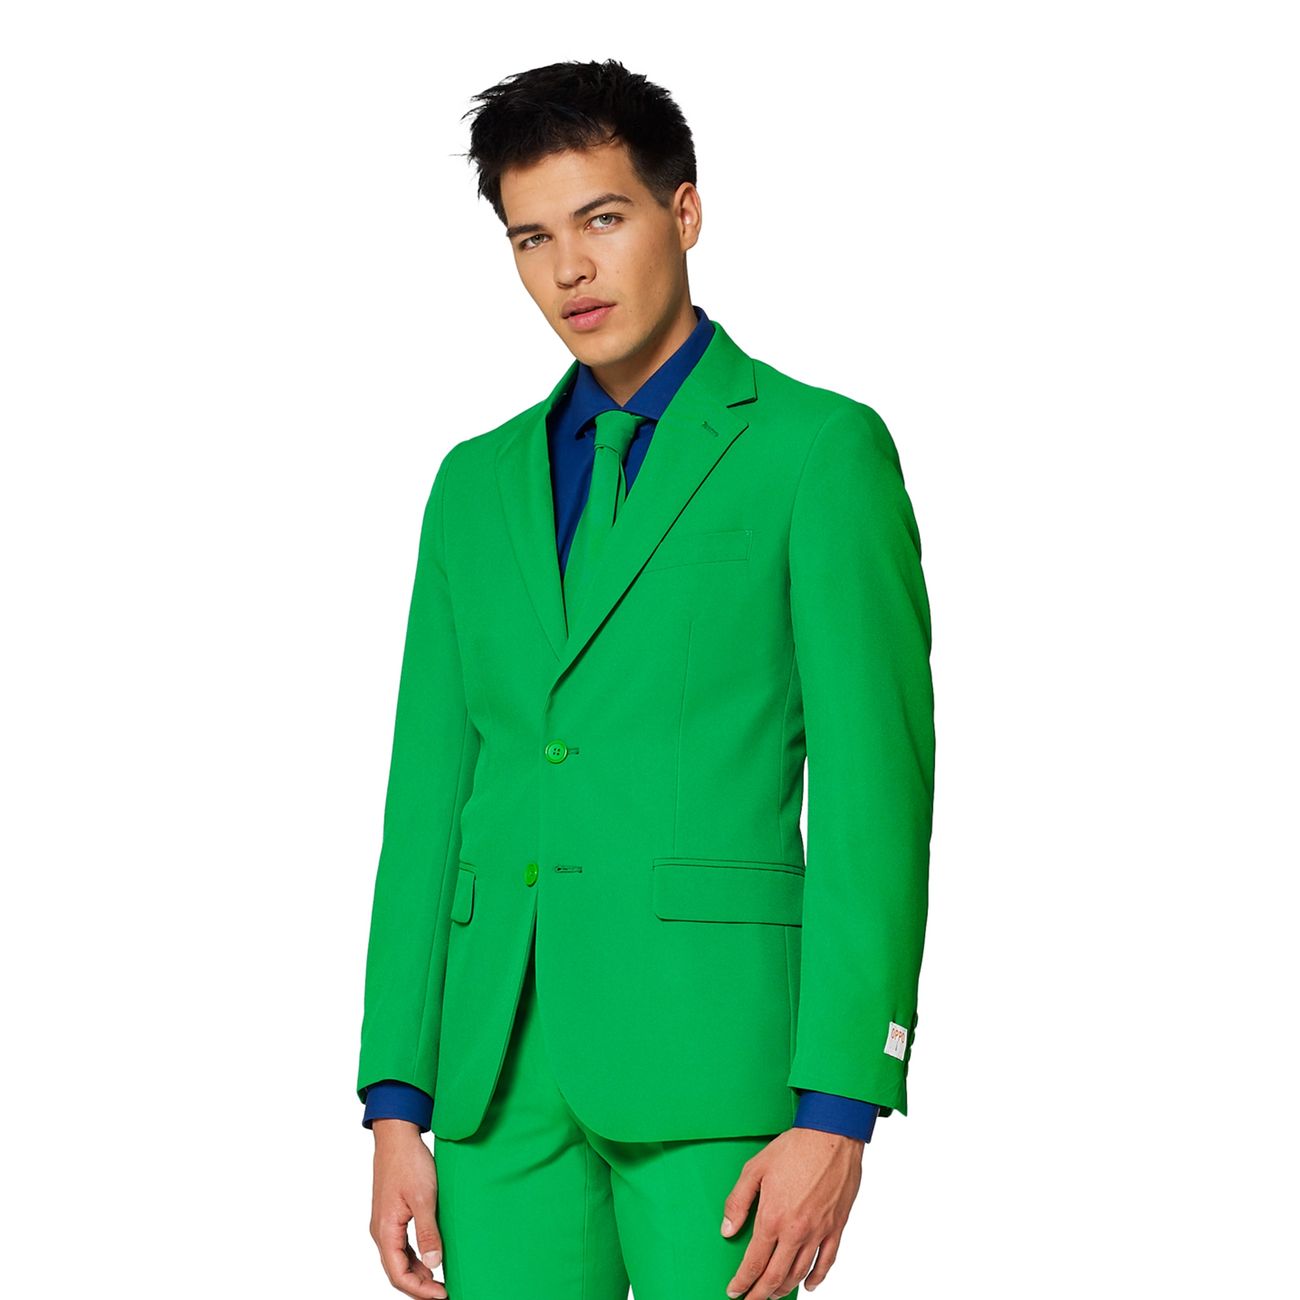 opposuits-evergreen-kostym-30658-6